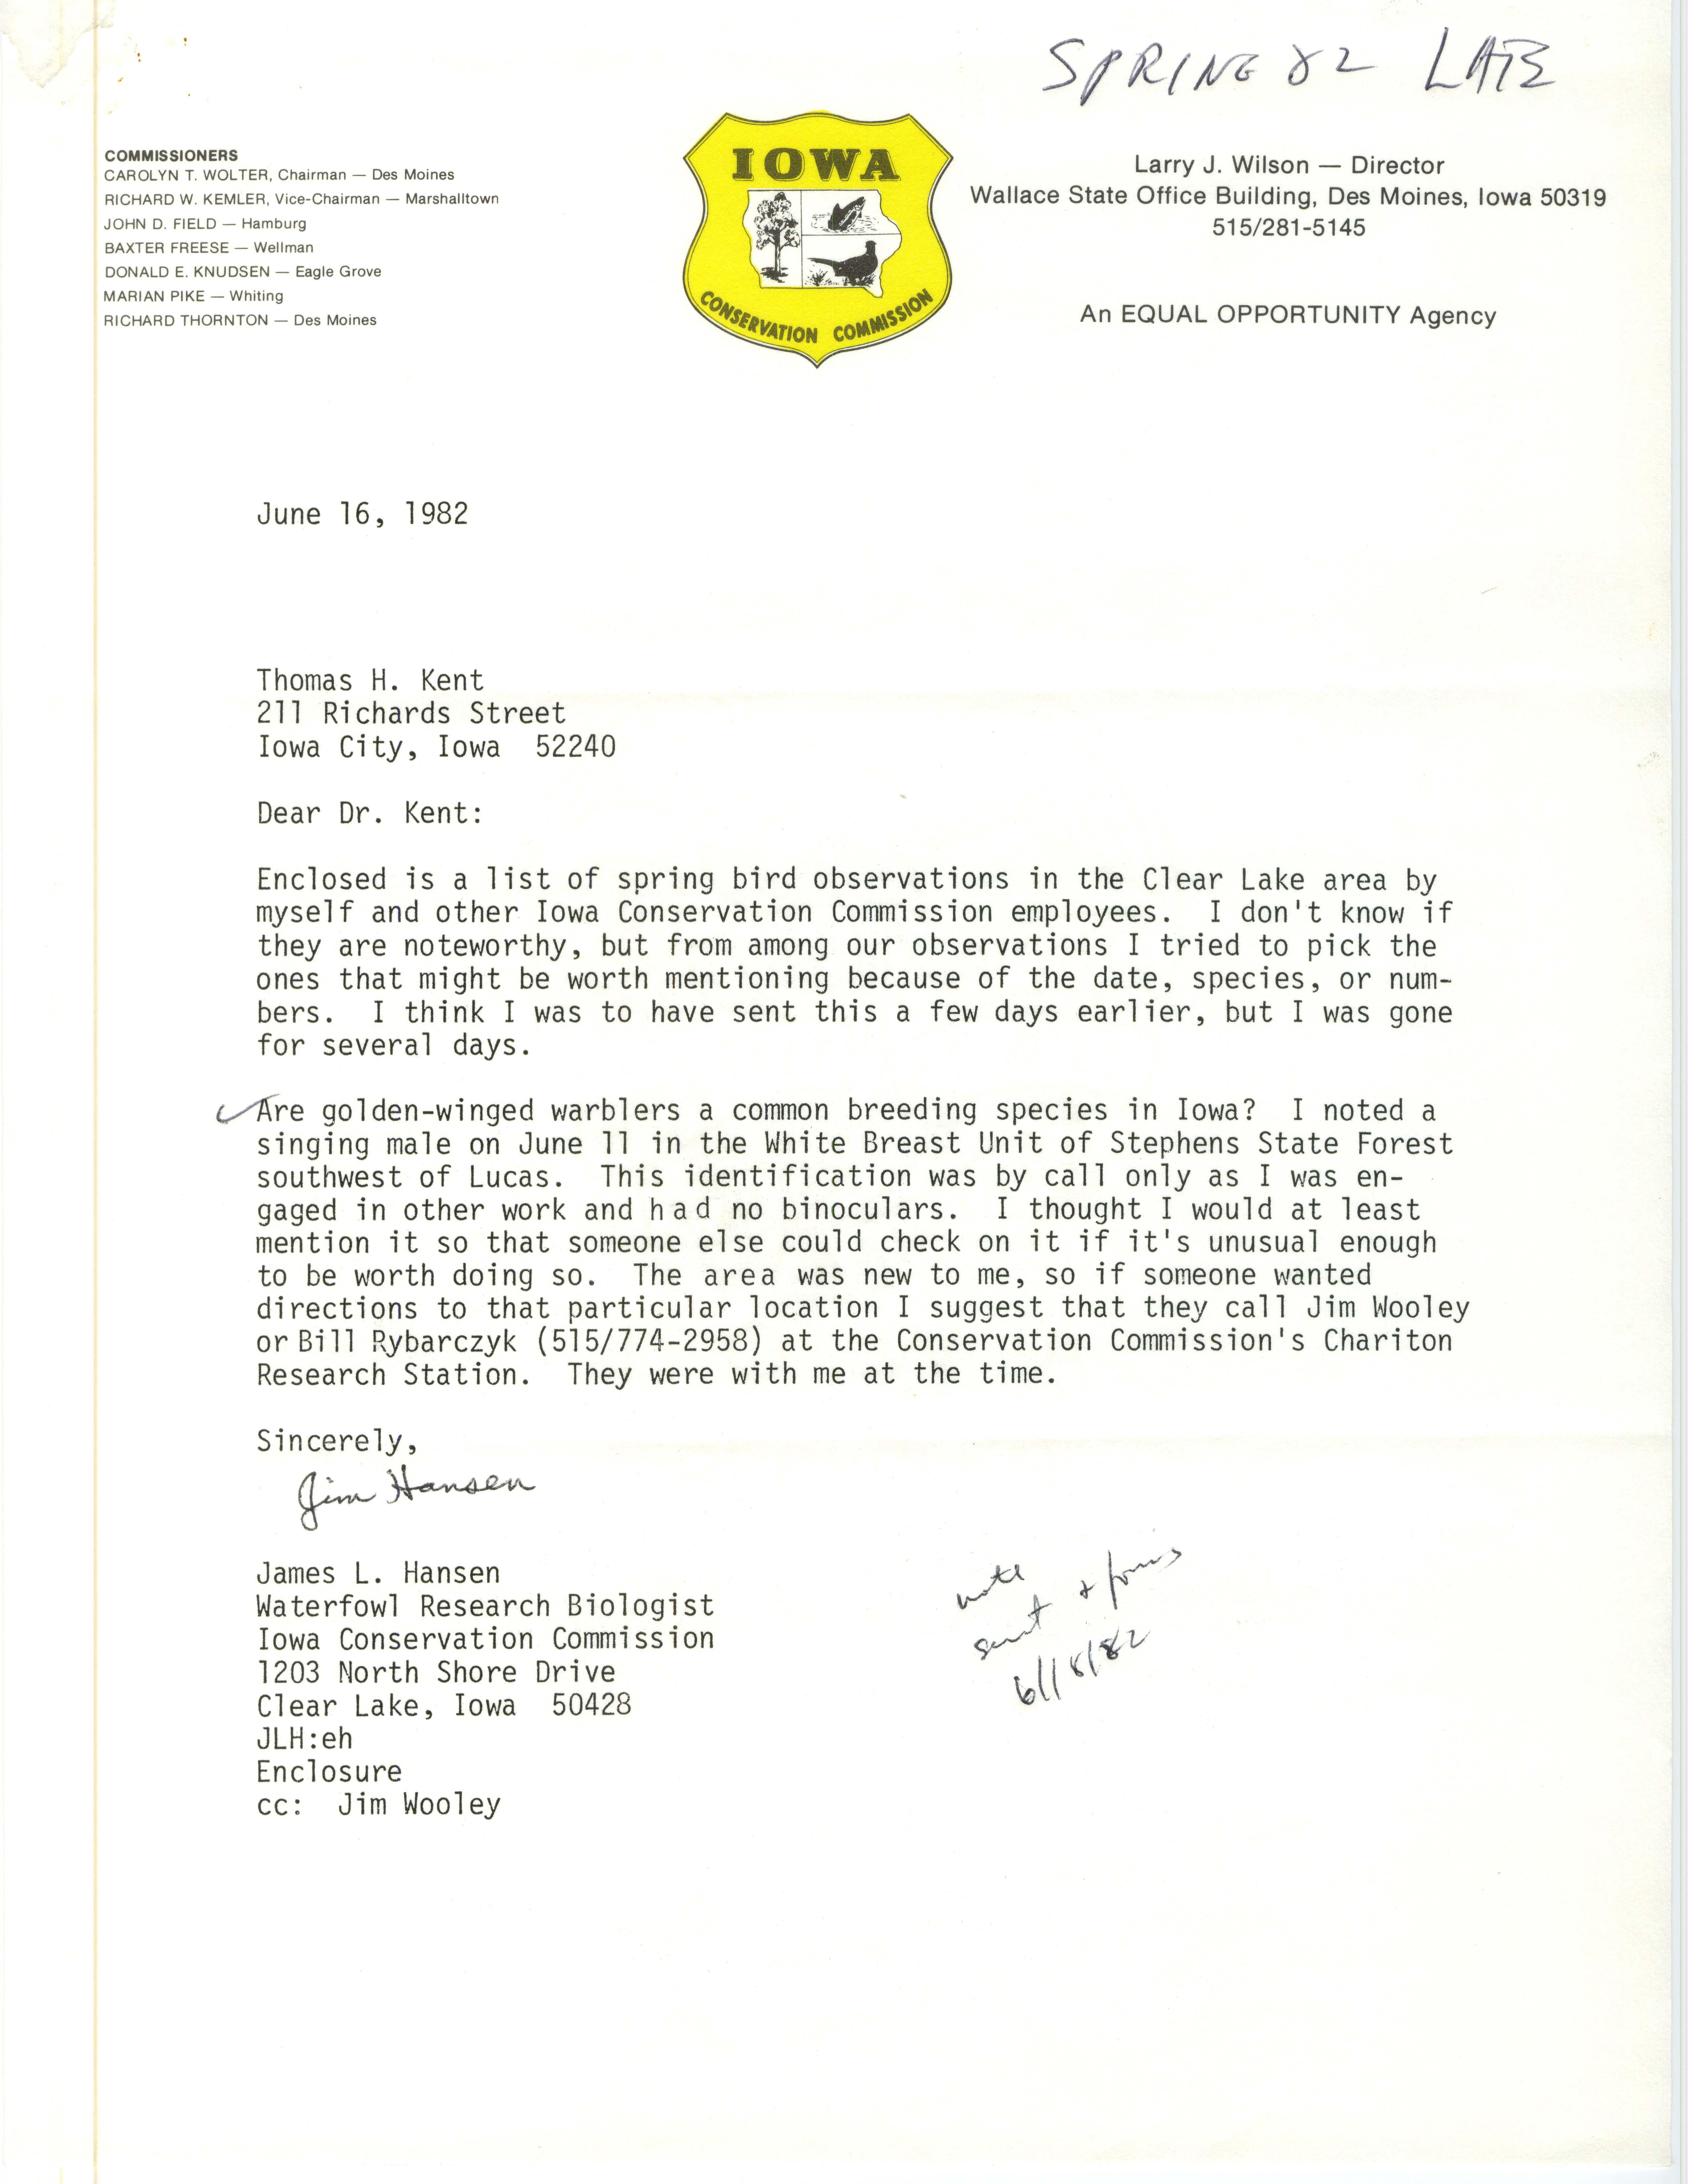 James L. Hansen letter to Thomas H. Kent regarding field report, June 16, 1982